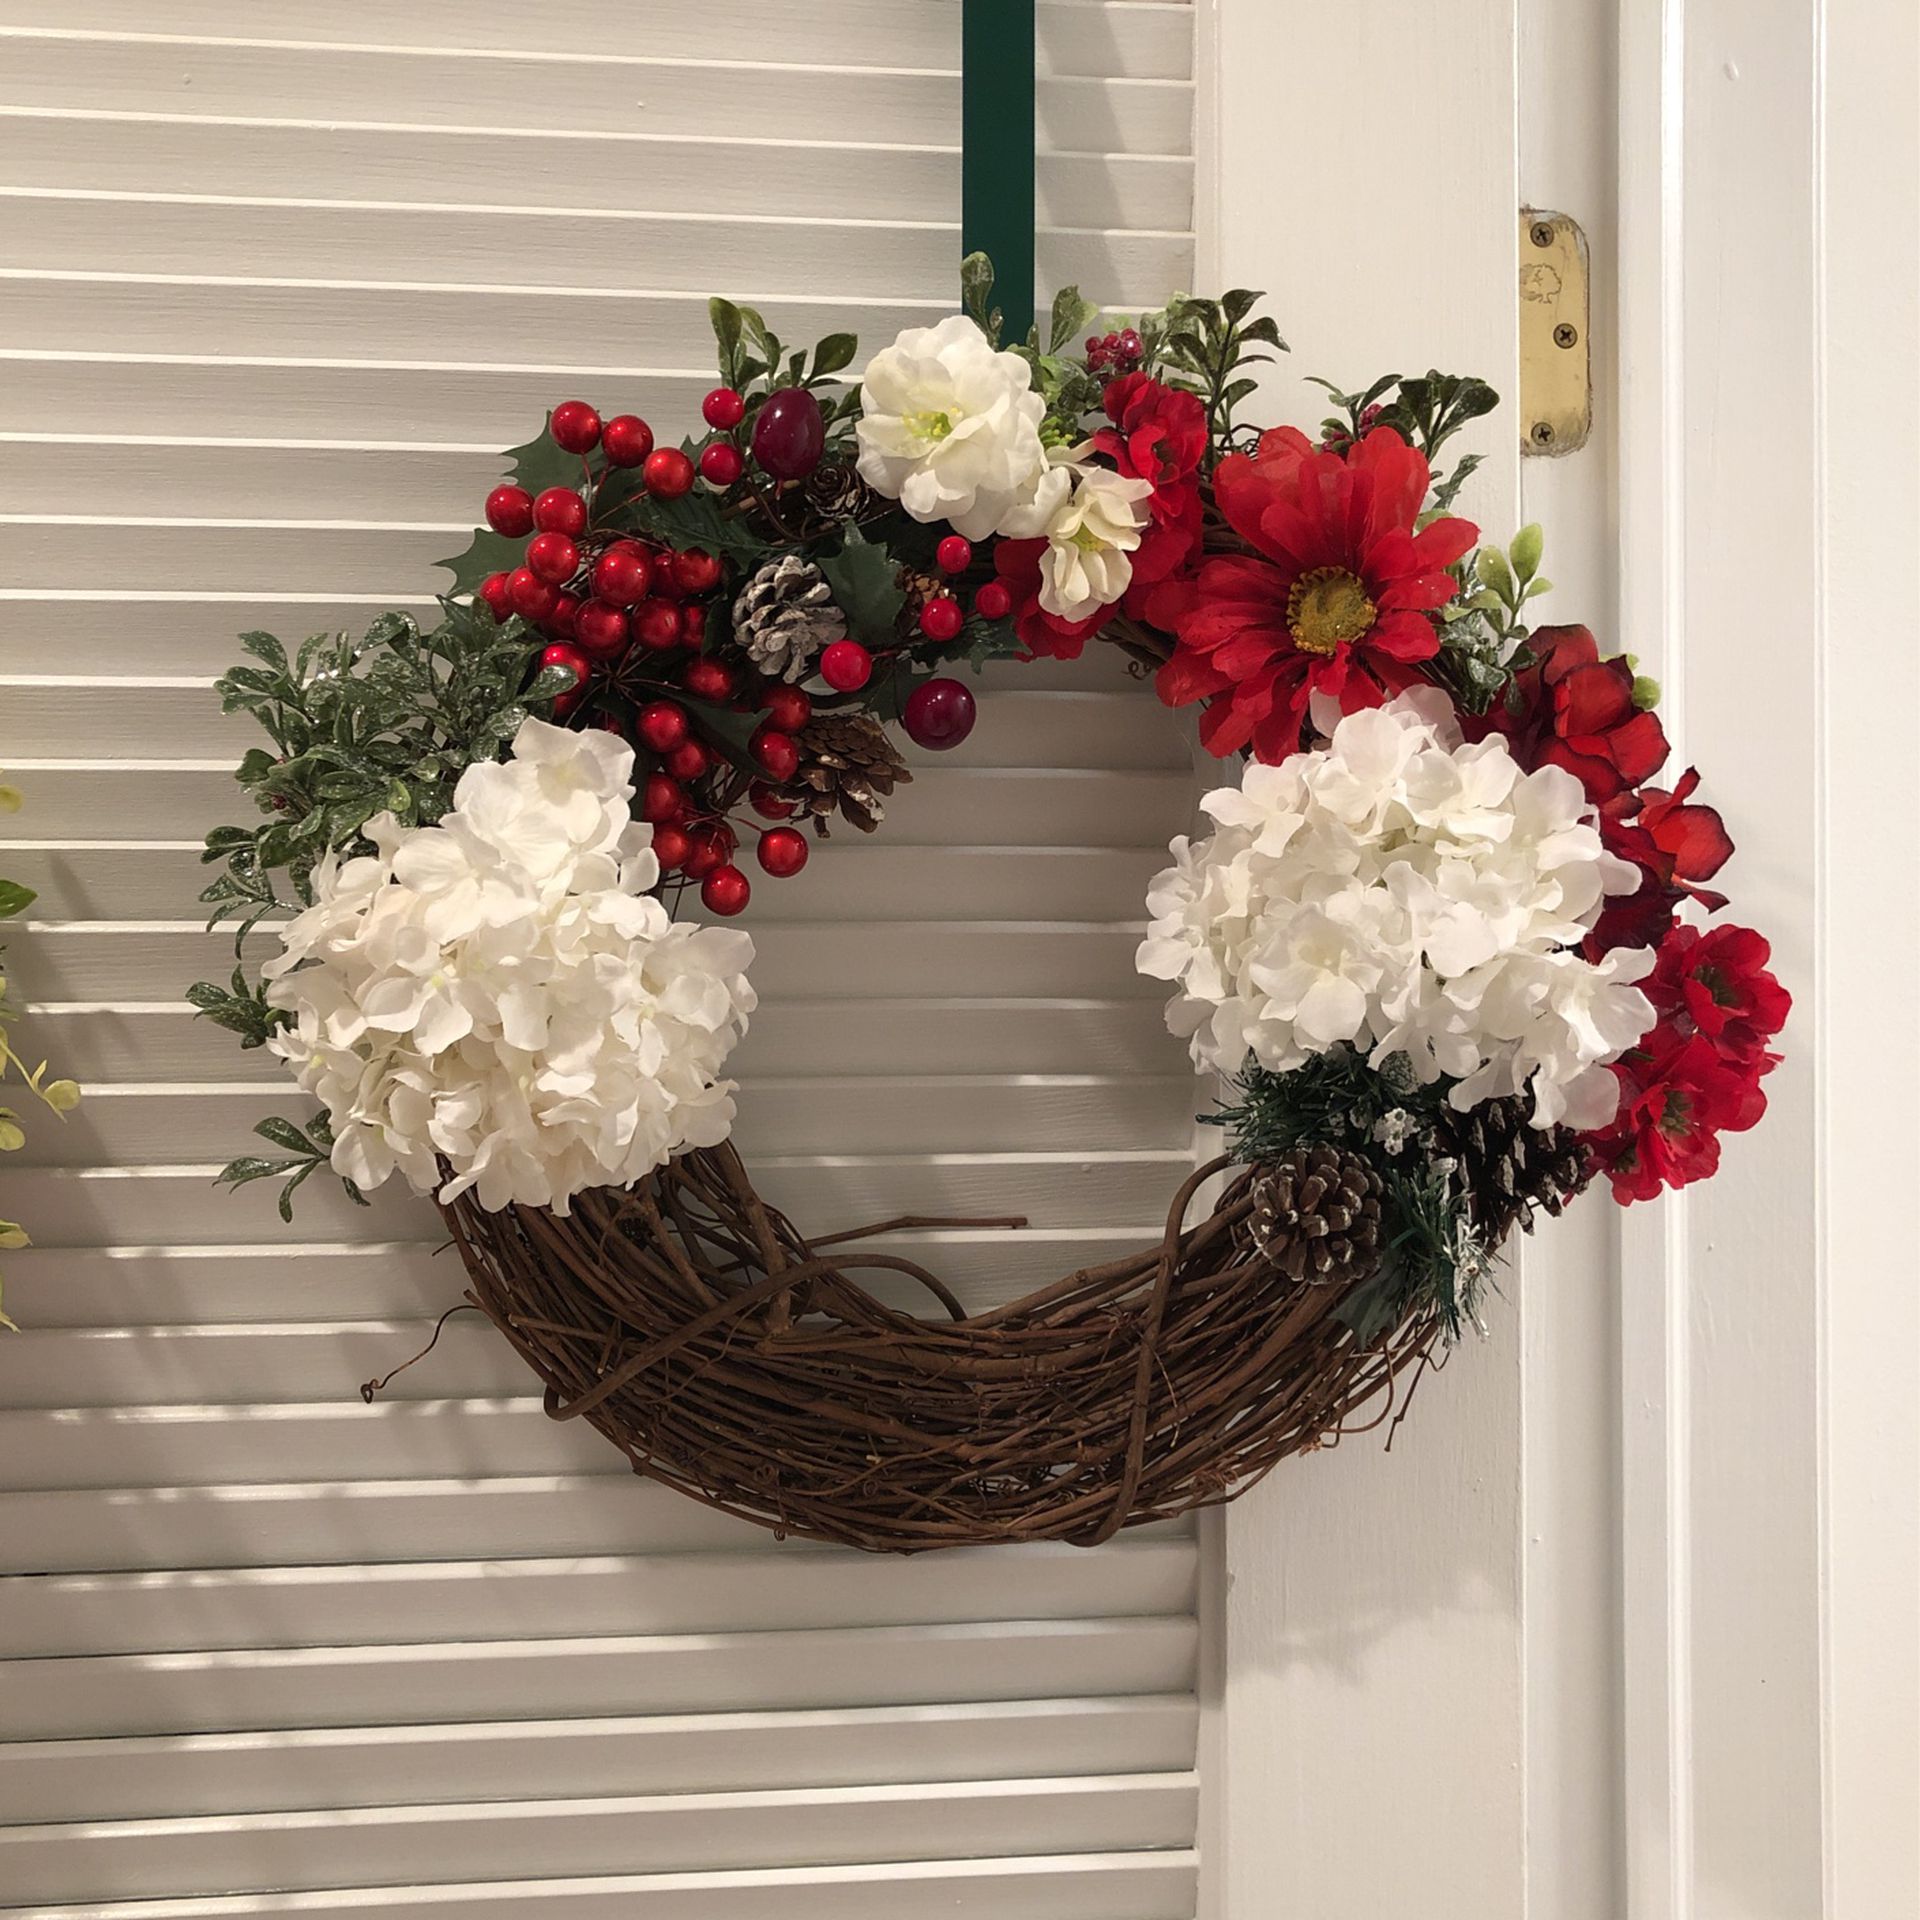 Beautiful Christmas Wreath